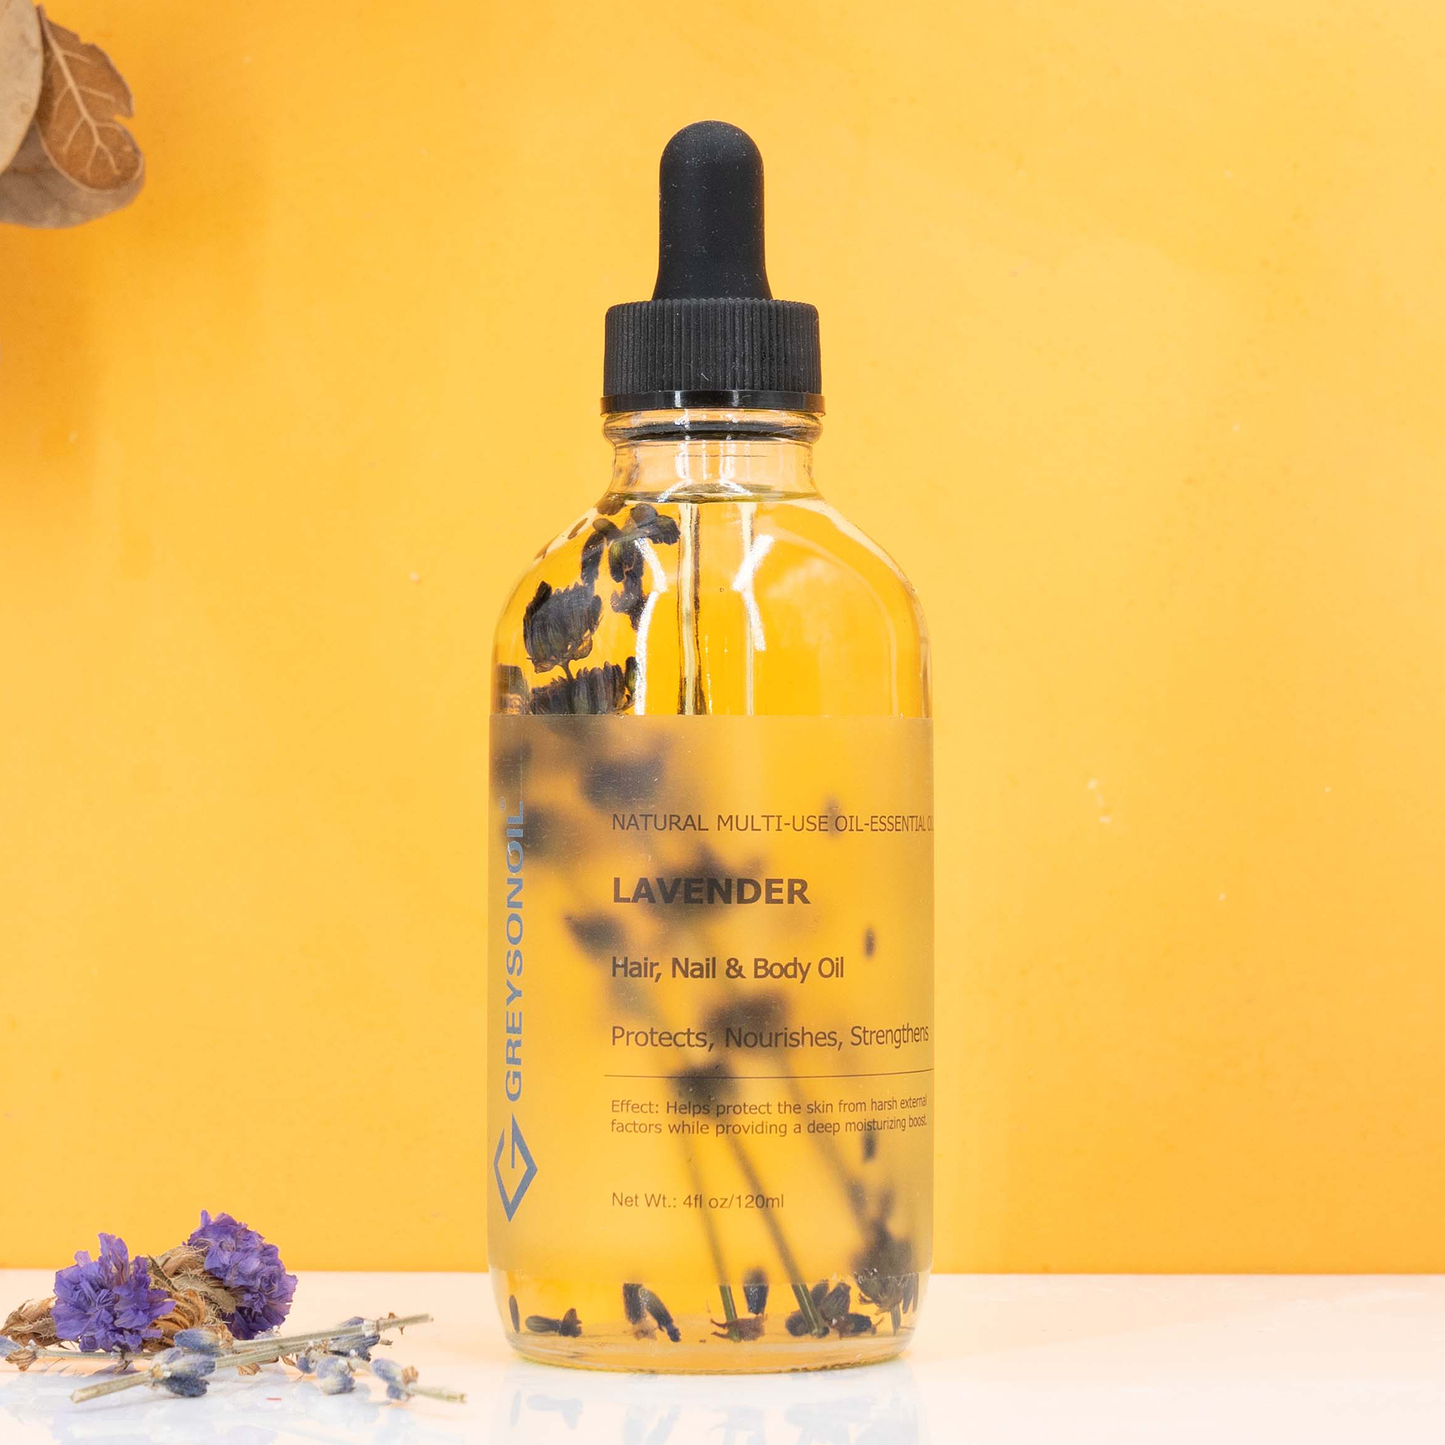 GREYSONOIL - Lavender 100% natural essential oil + flower oil